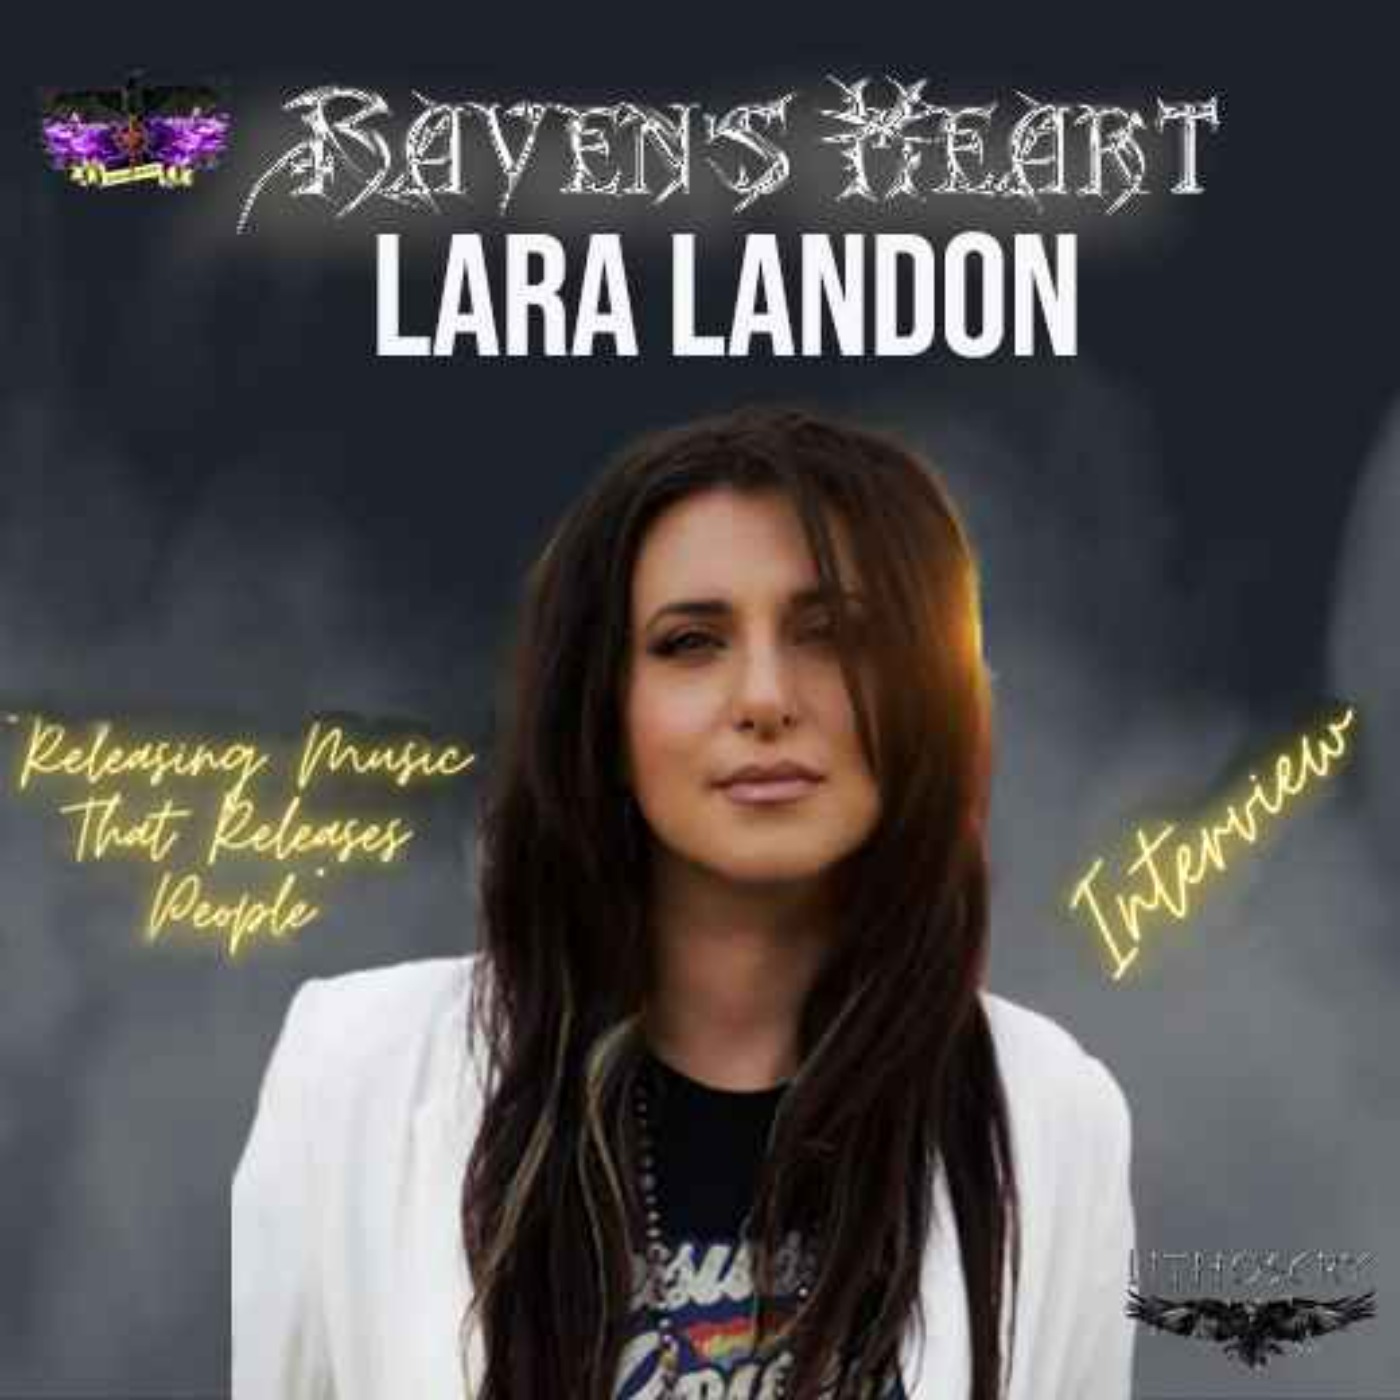 Uplifting Contemporary Christian Music: Lara Landon Interview